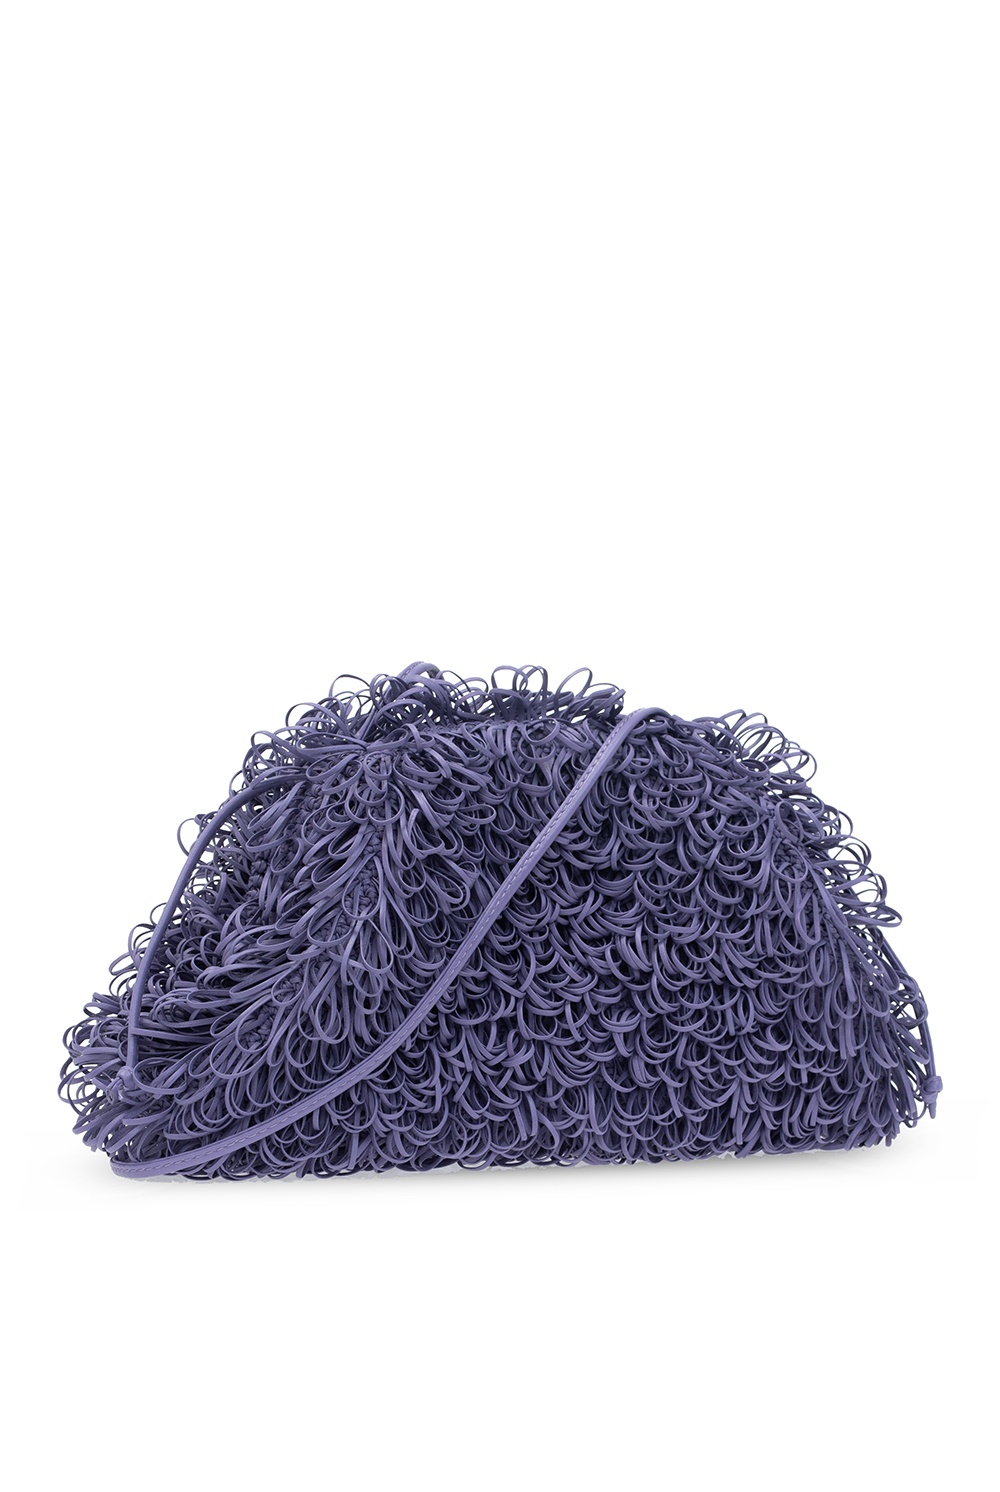 Bottega Veneta ‘The Sponge’ shoulder bag